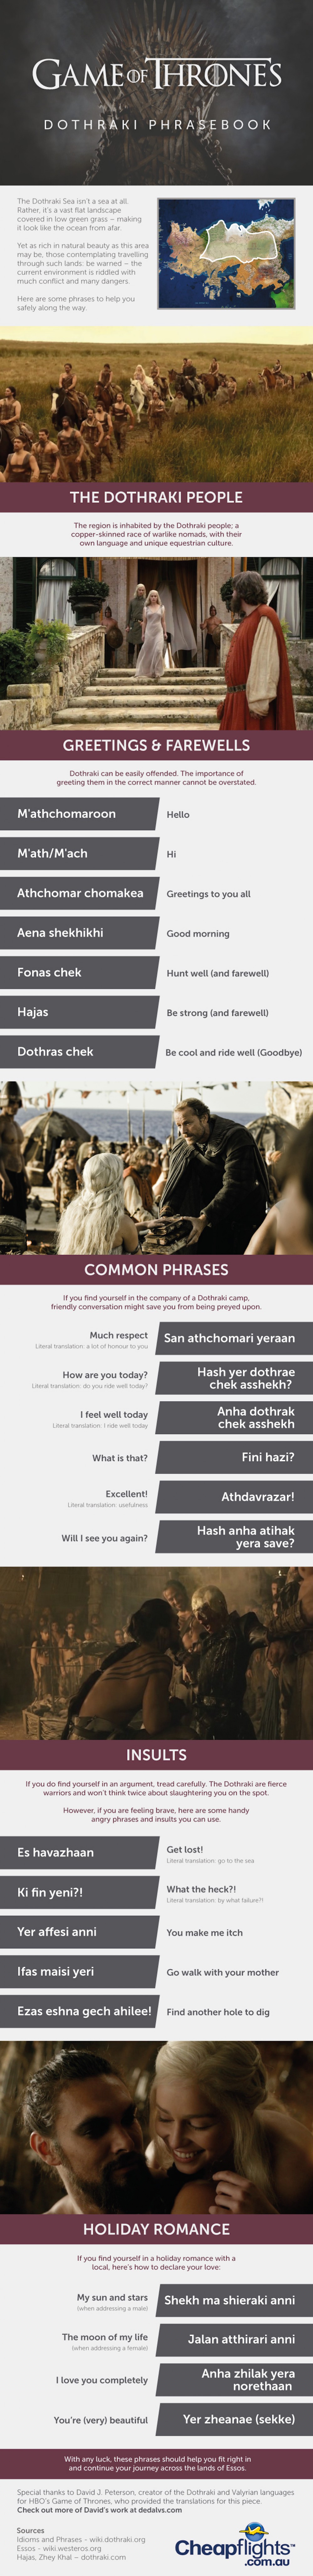 got_dothraki